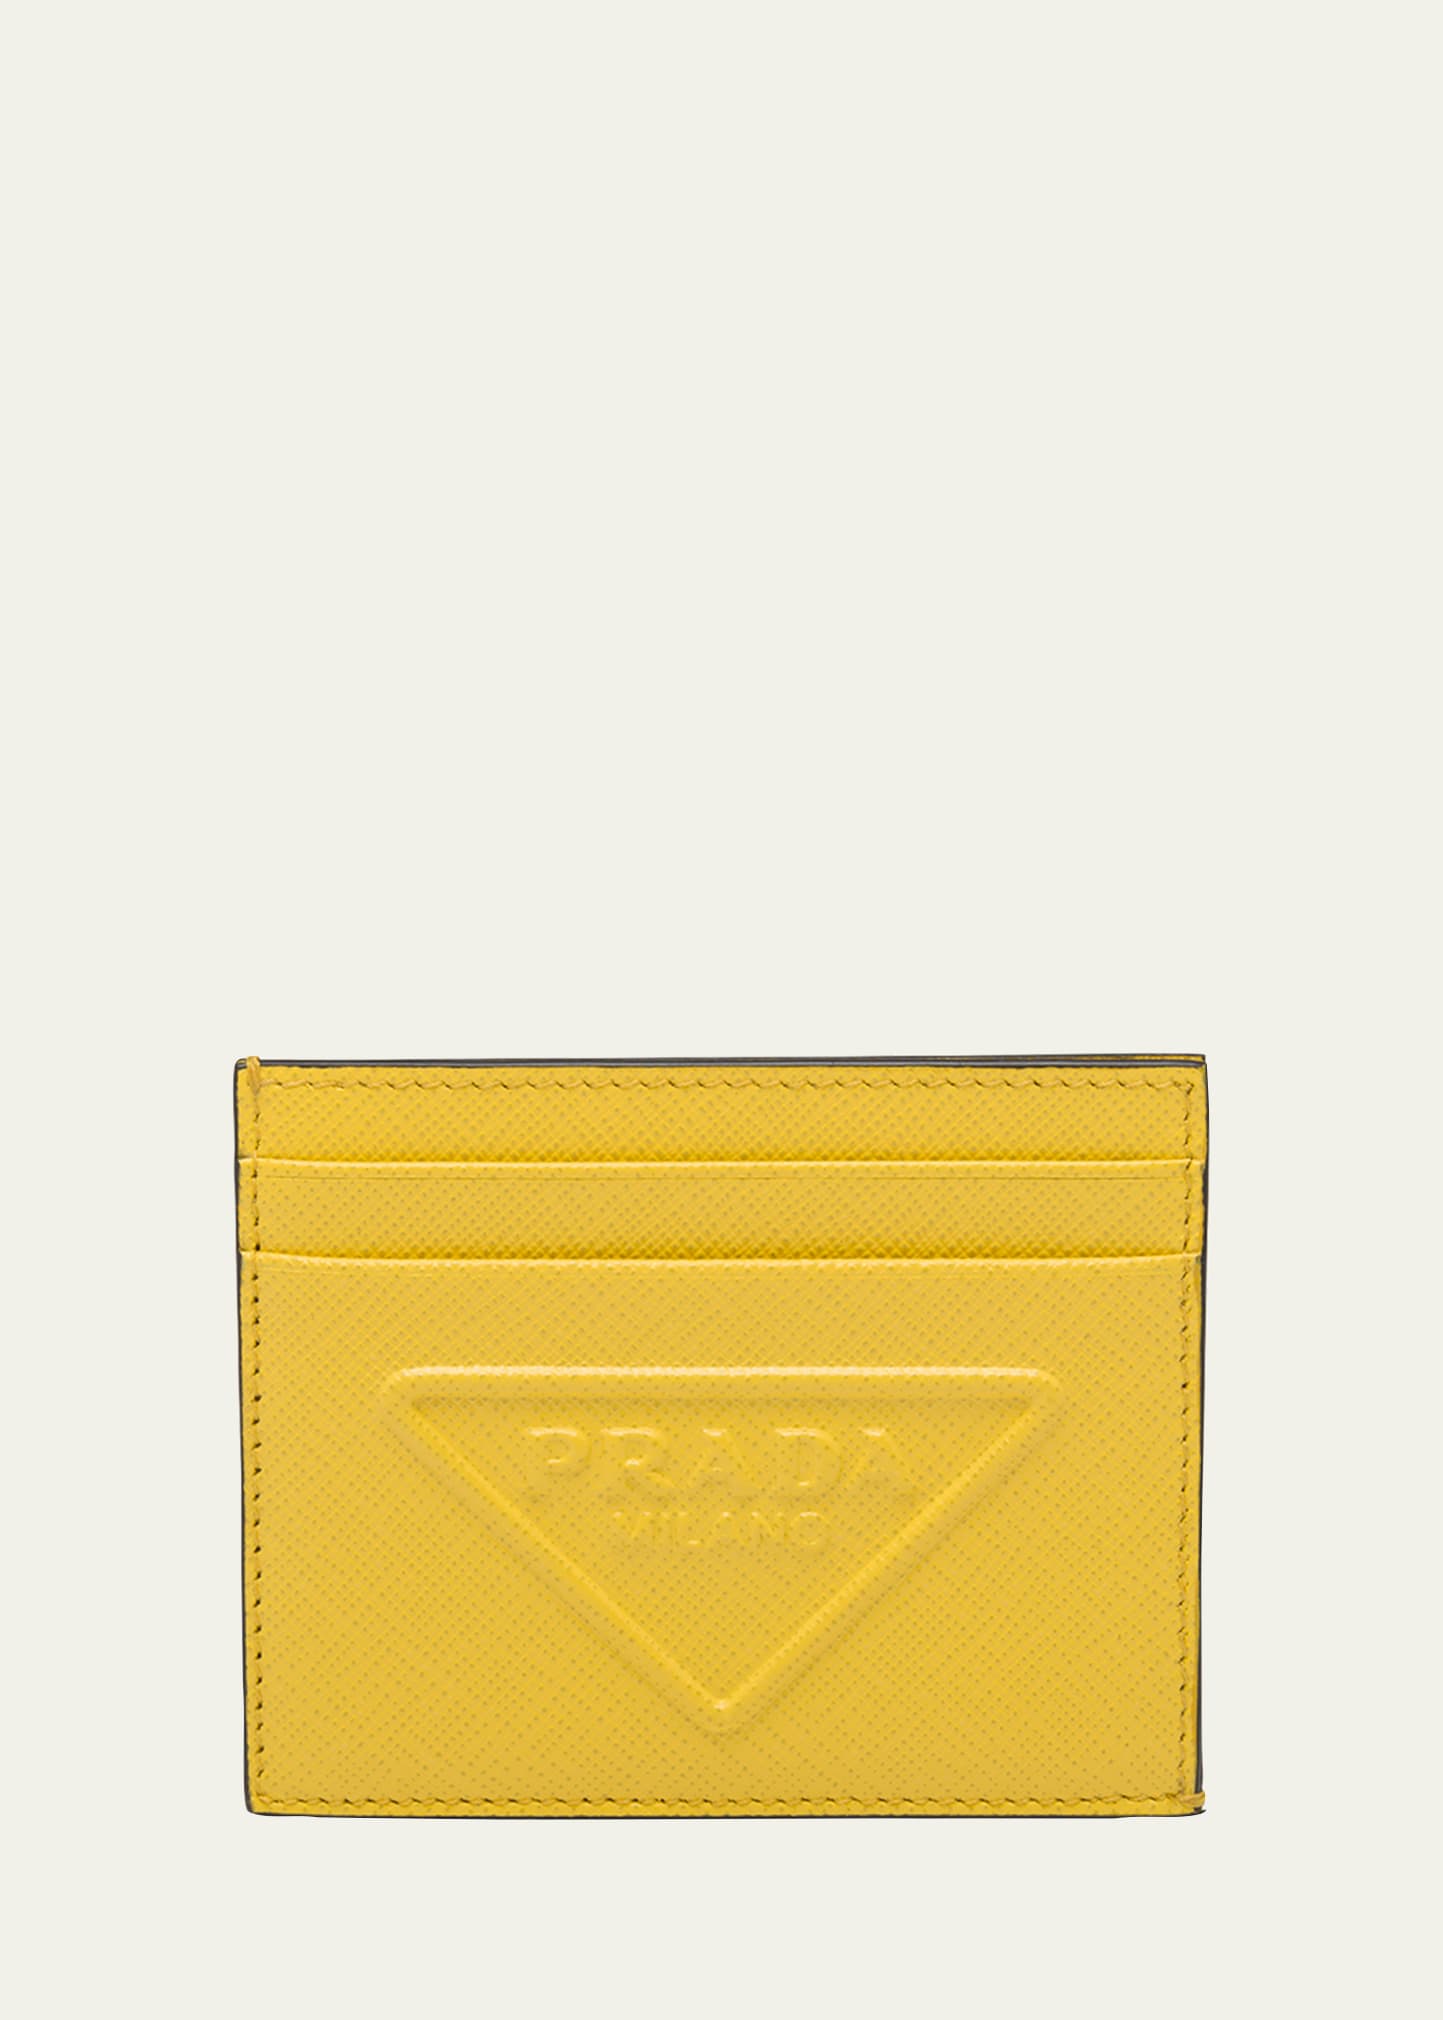 Prada Men's Saffiano Tonal Logo Leather Card Case In F0377 Sole